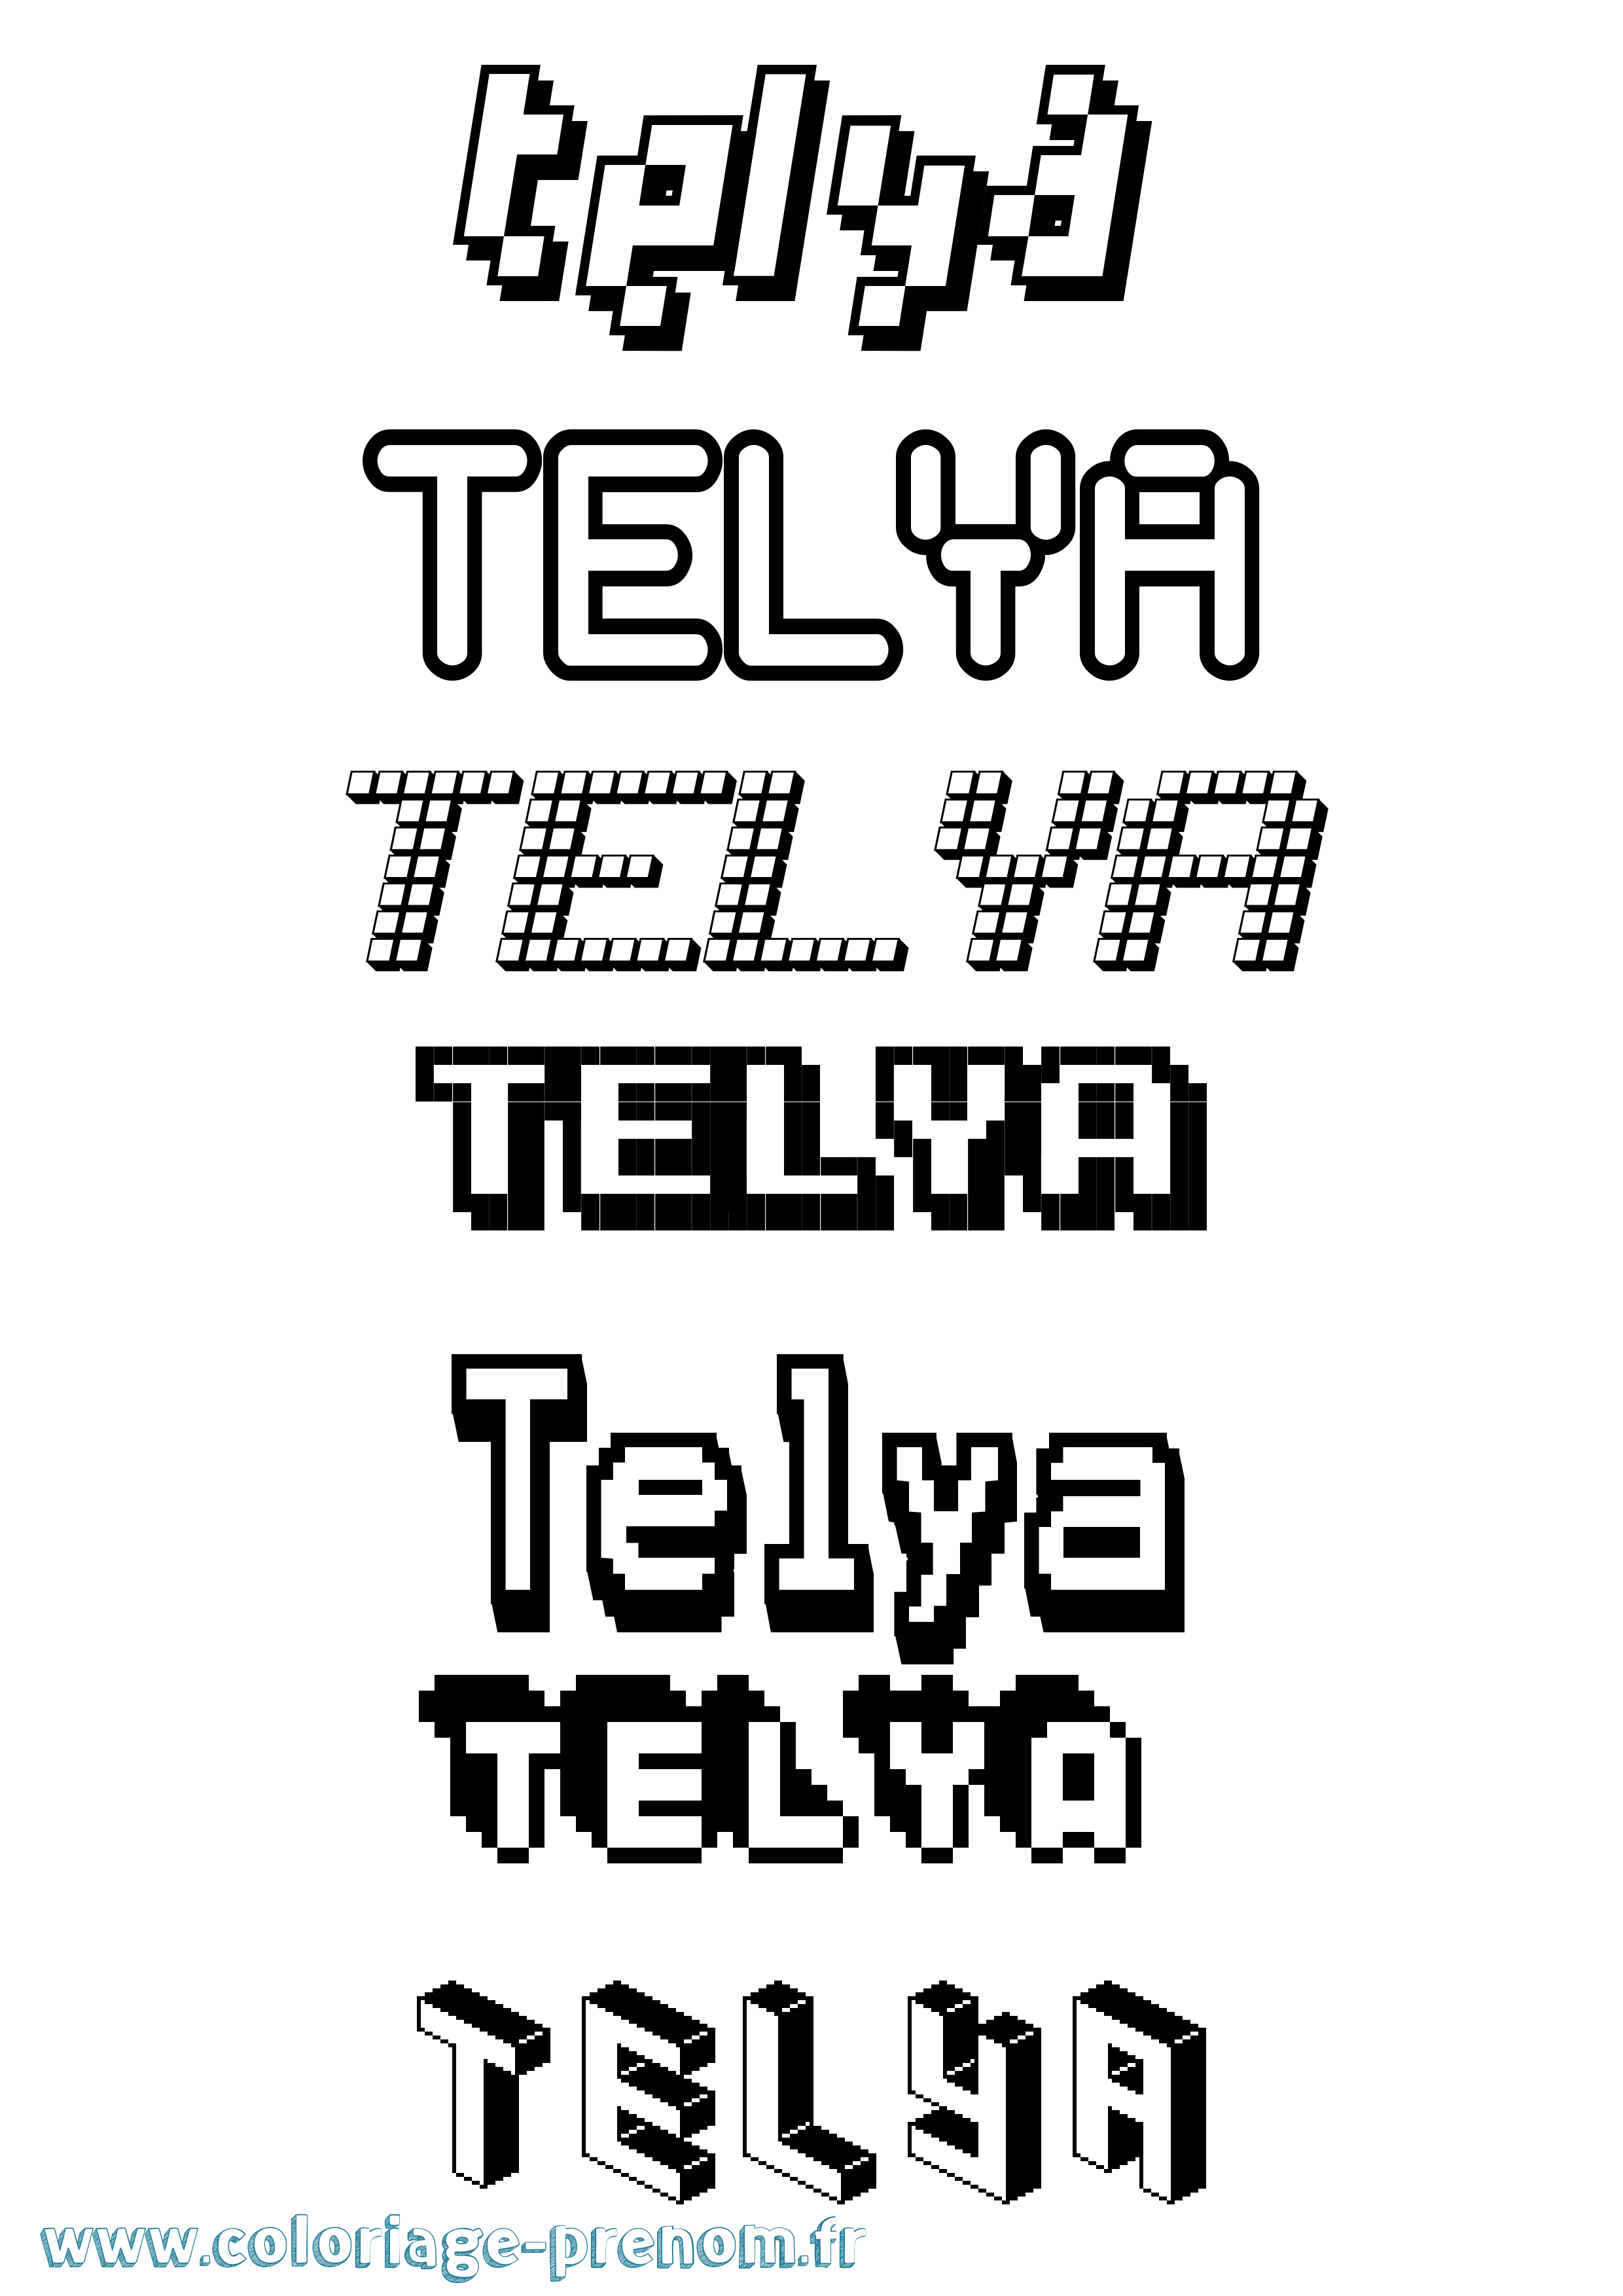 Coloriage prénom Telya Pixel